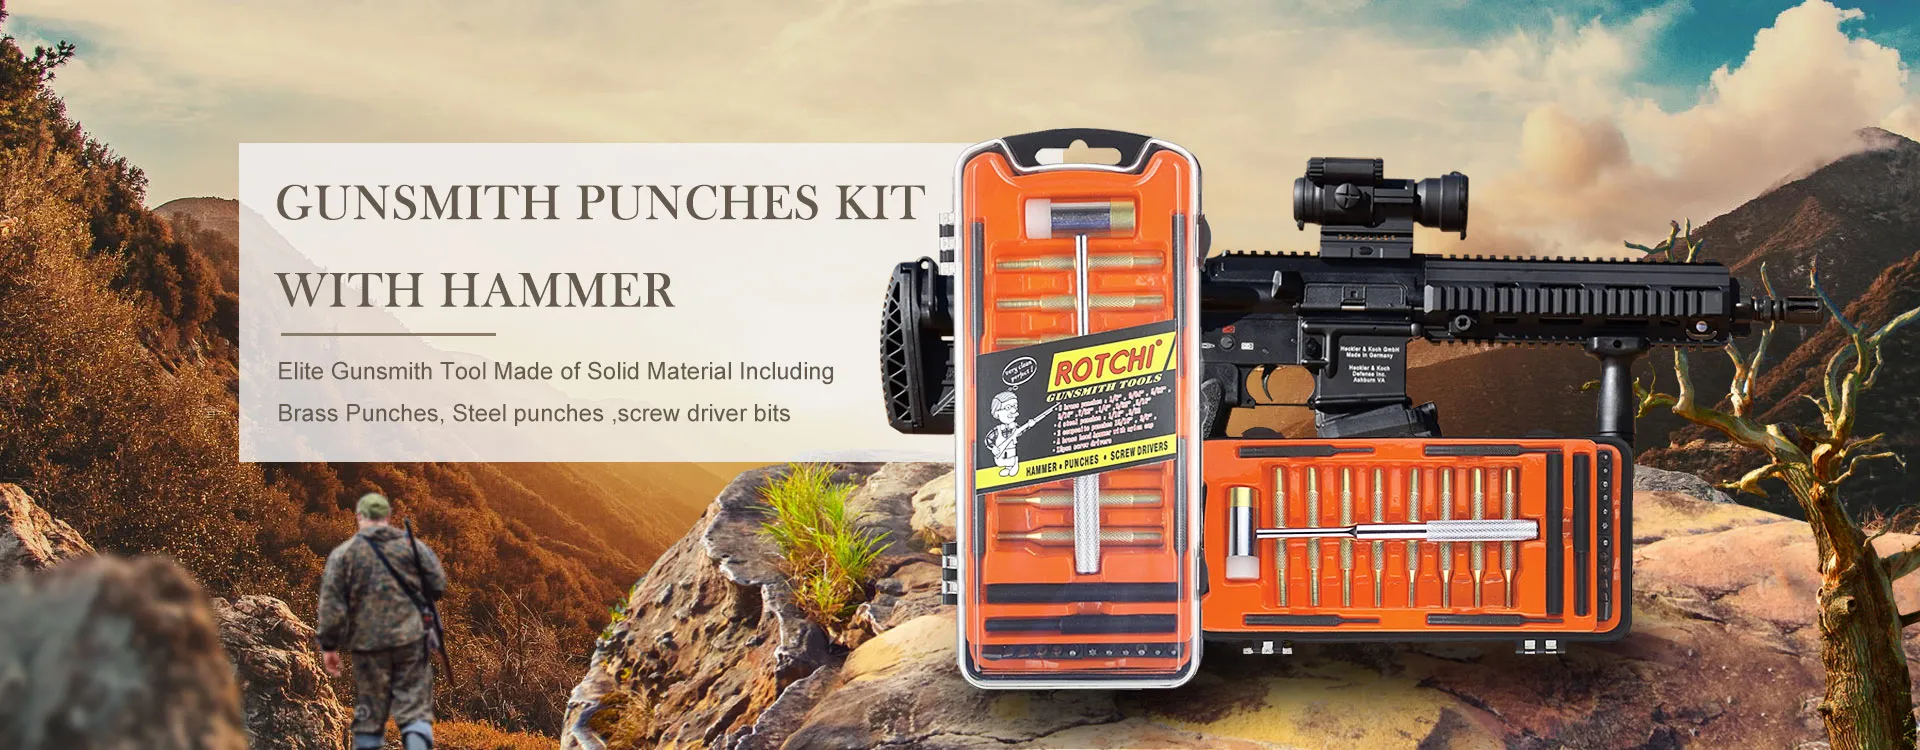 Gunsmith Punches Kit với Hammer